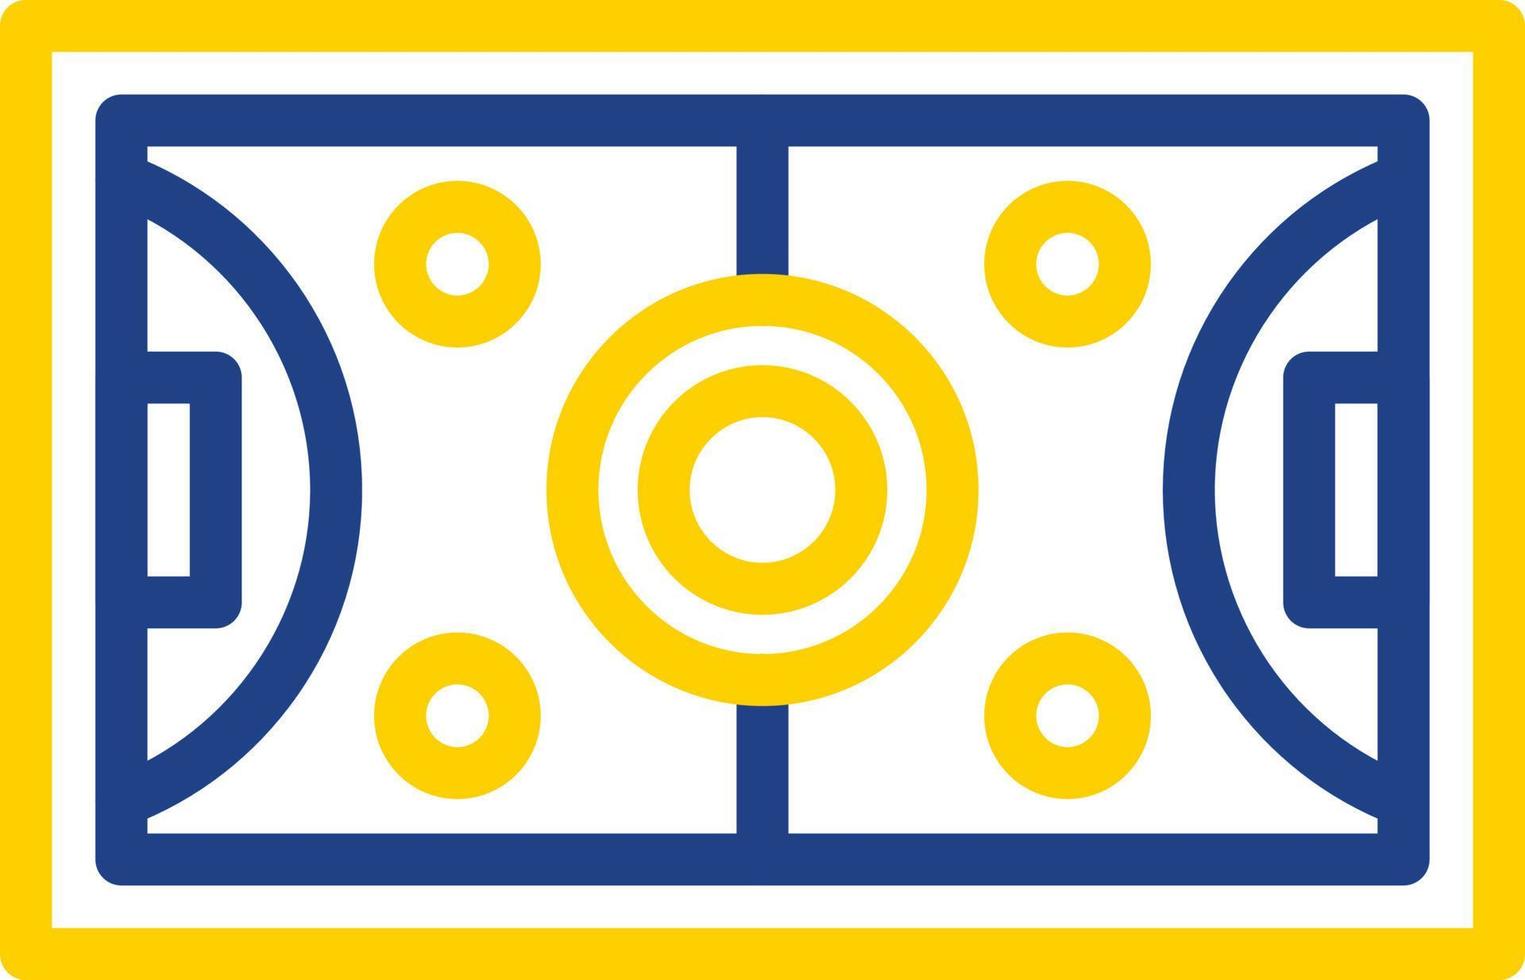 conception d'icône de vecteur de terrain de hockey